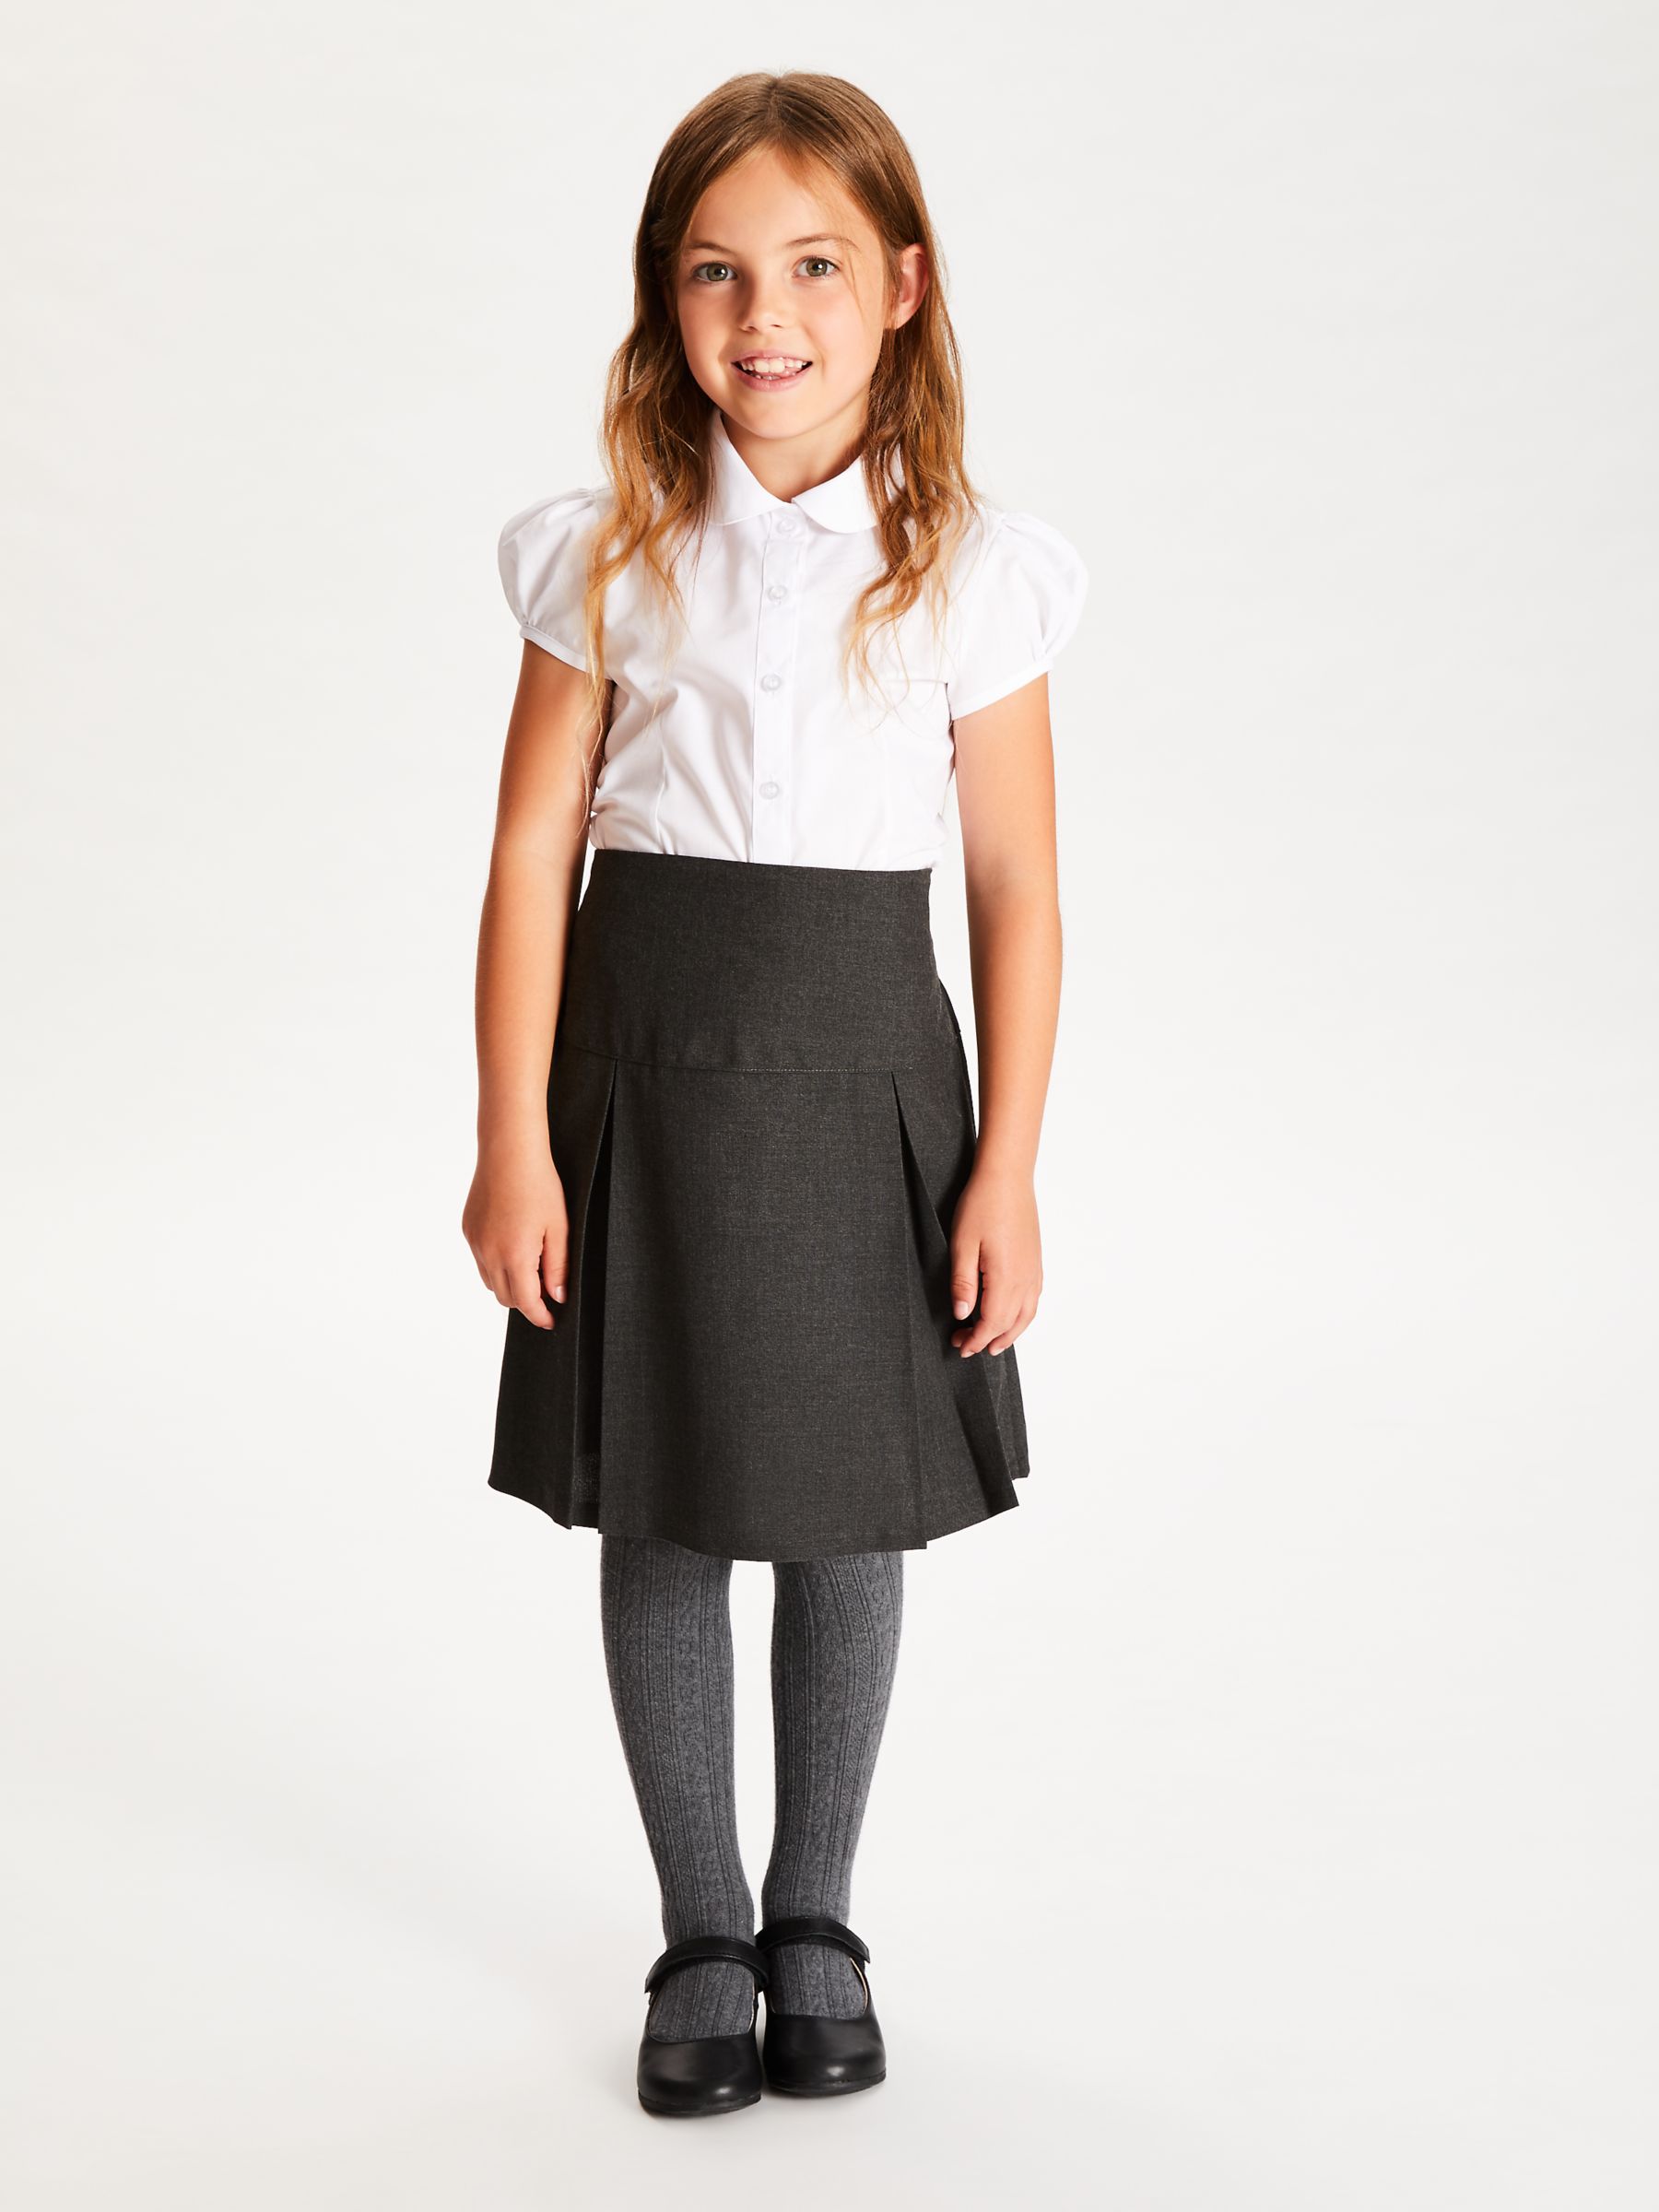 Buy John Lewis Girls' Easy Care Cap Sleeve School Blouse, Pack of 2, White Online at johnlewis.com